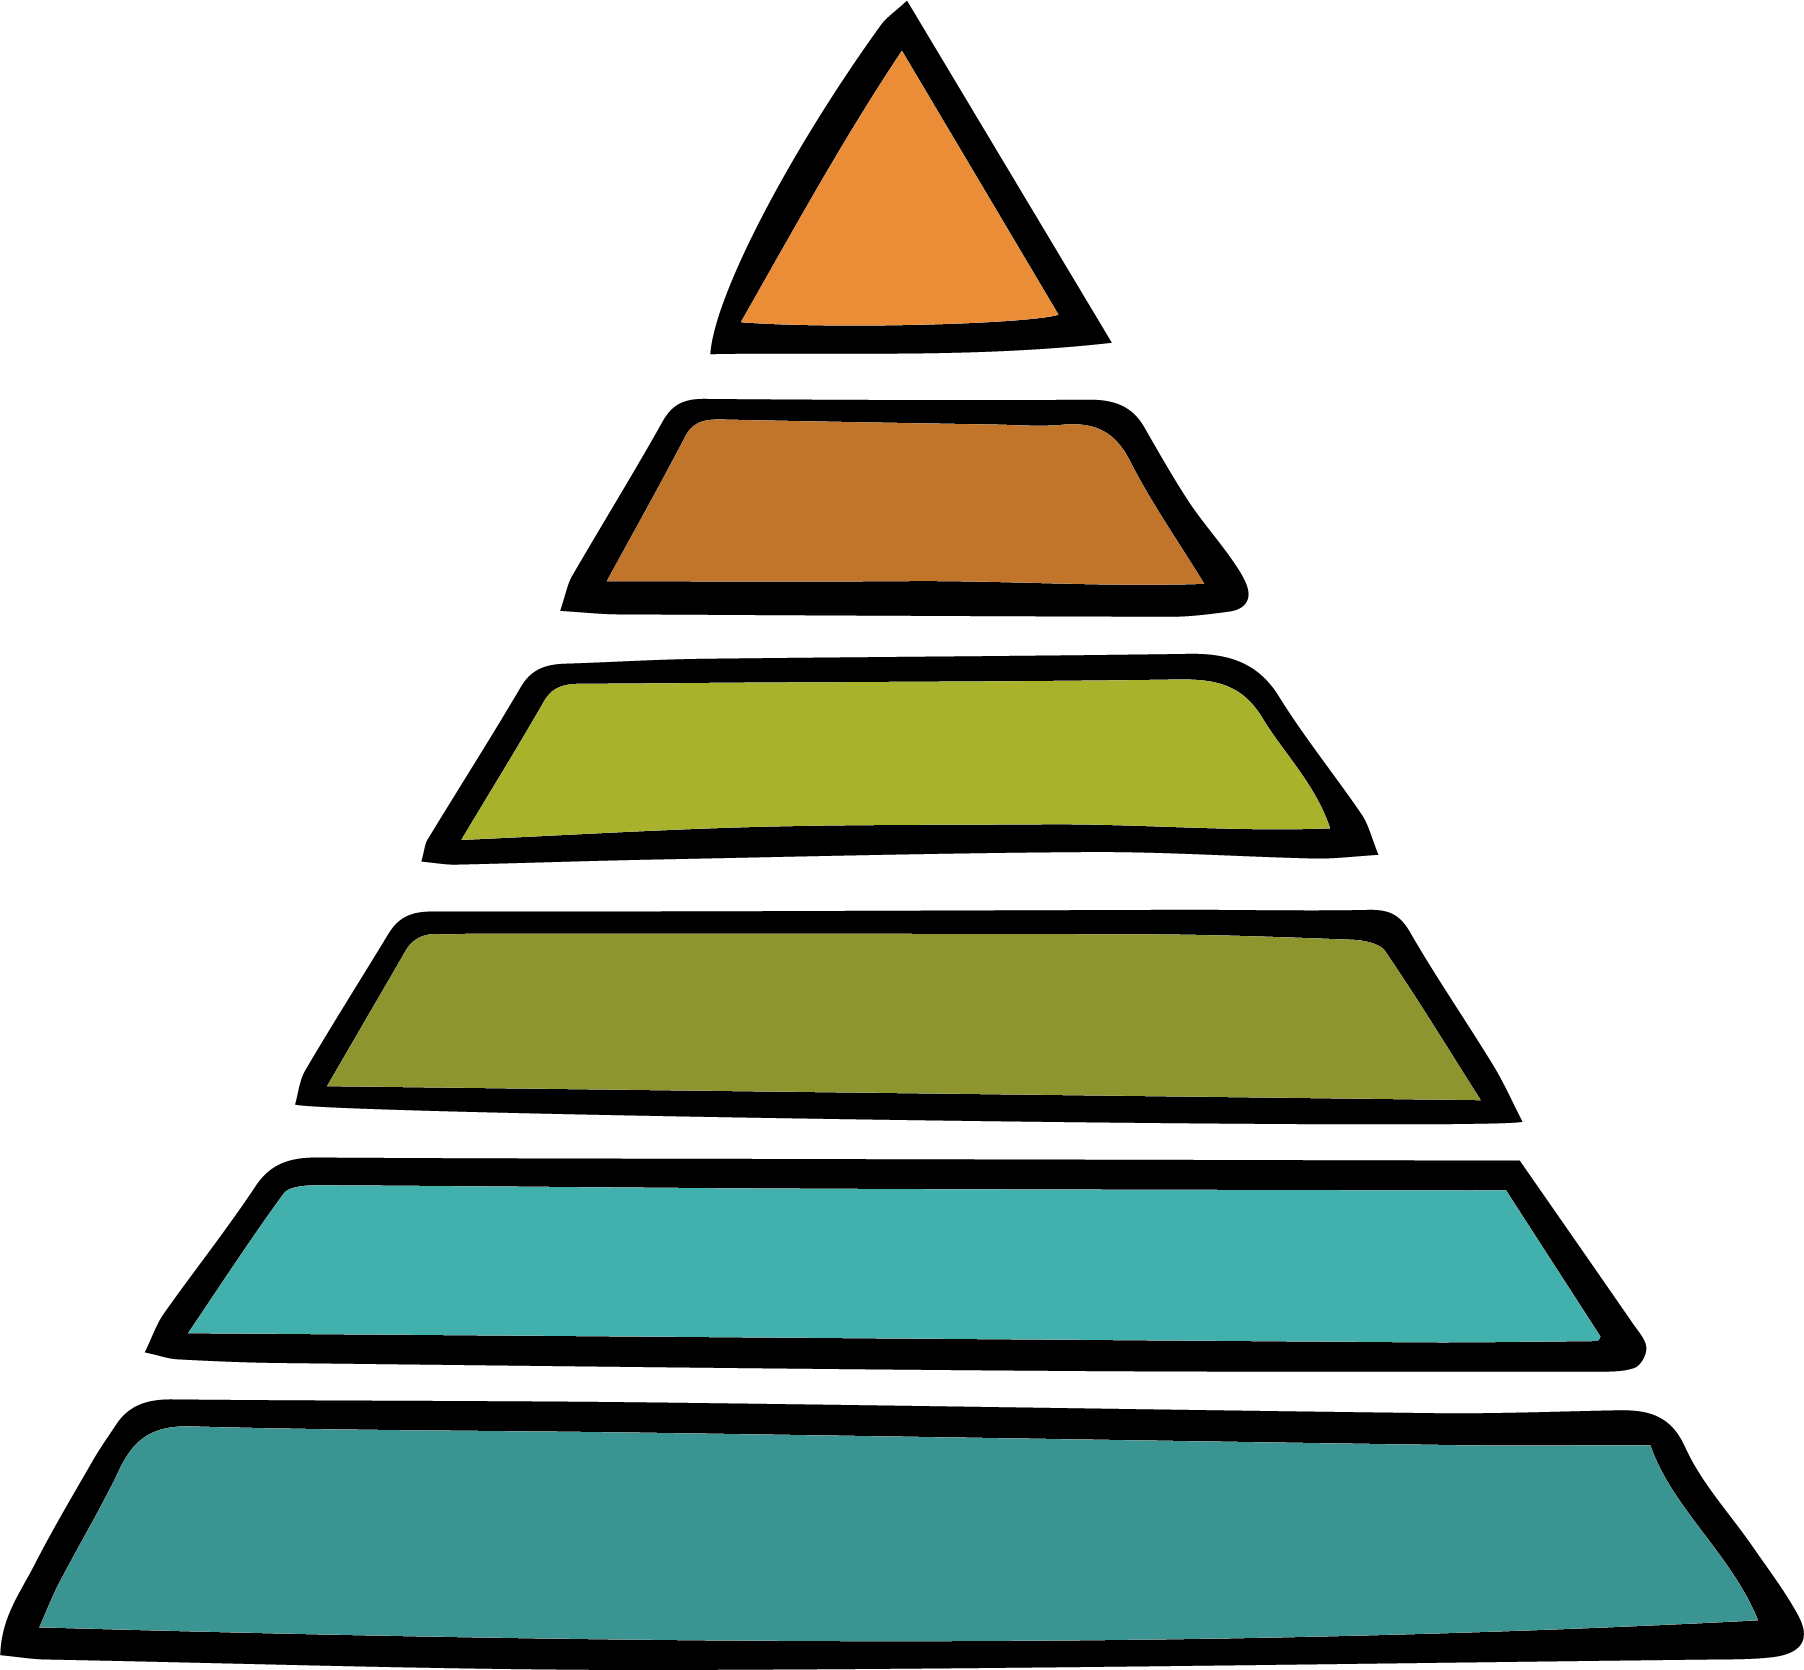 Hierarchical Pyramid Chart - Hierarchy Pyramid Chart (1804x1670)